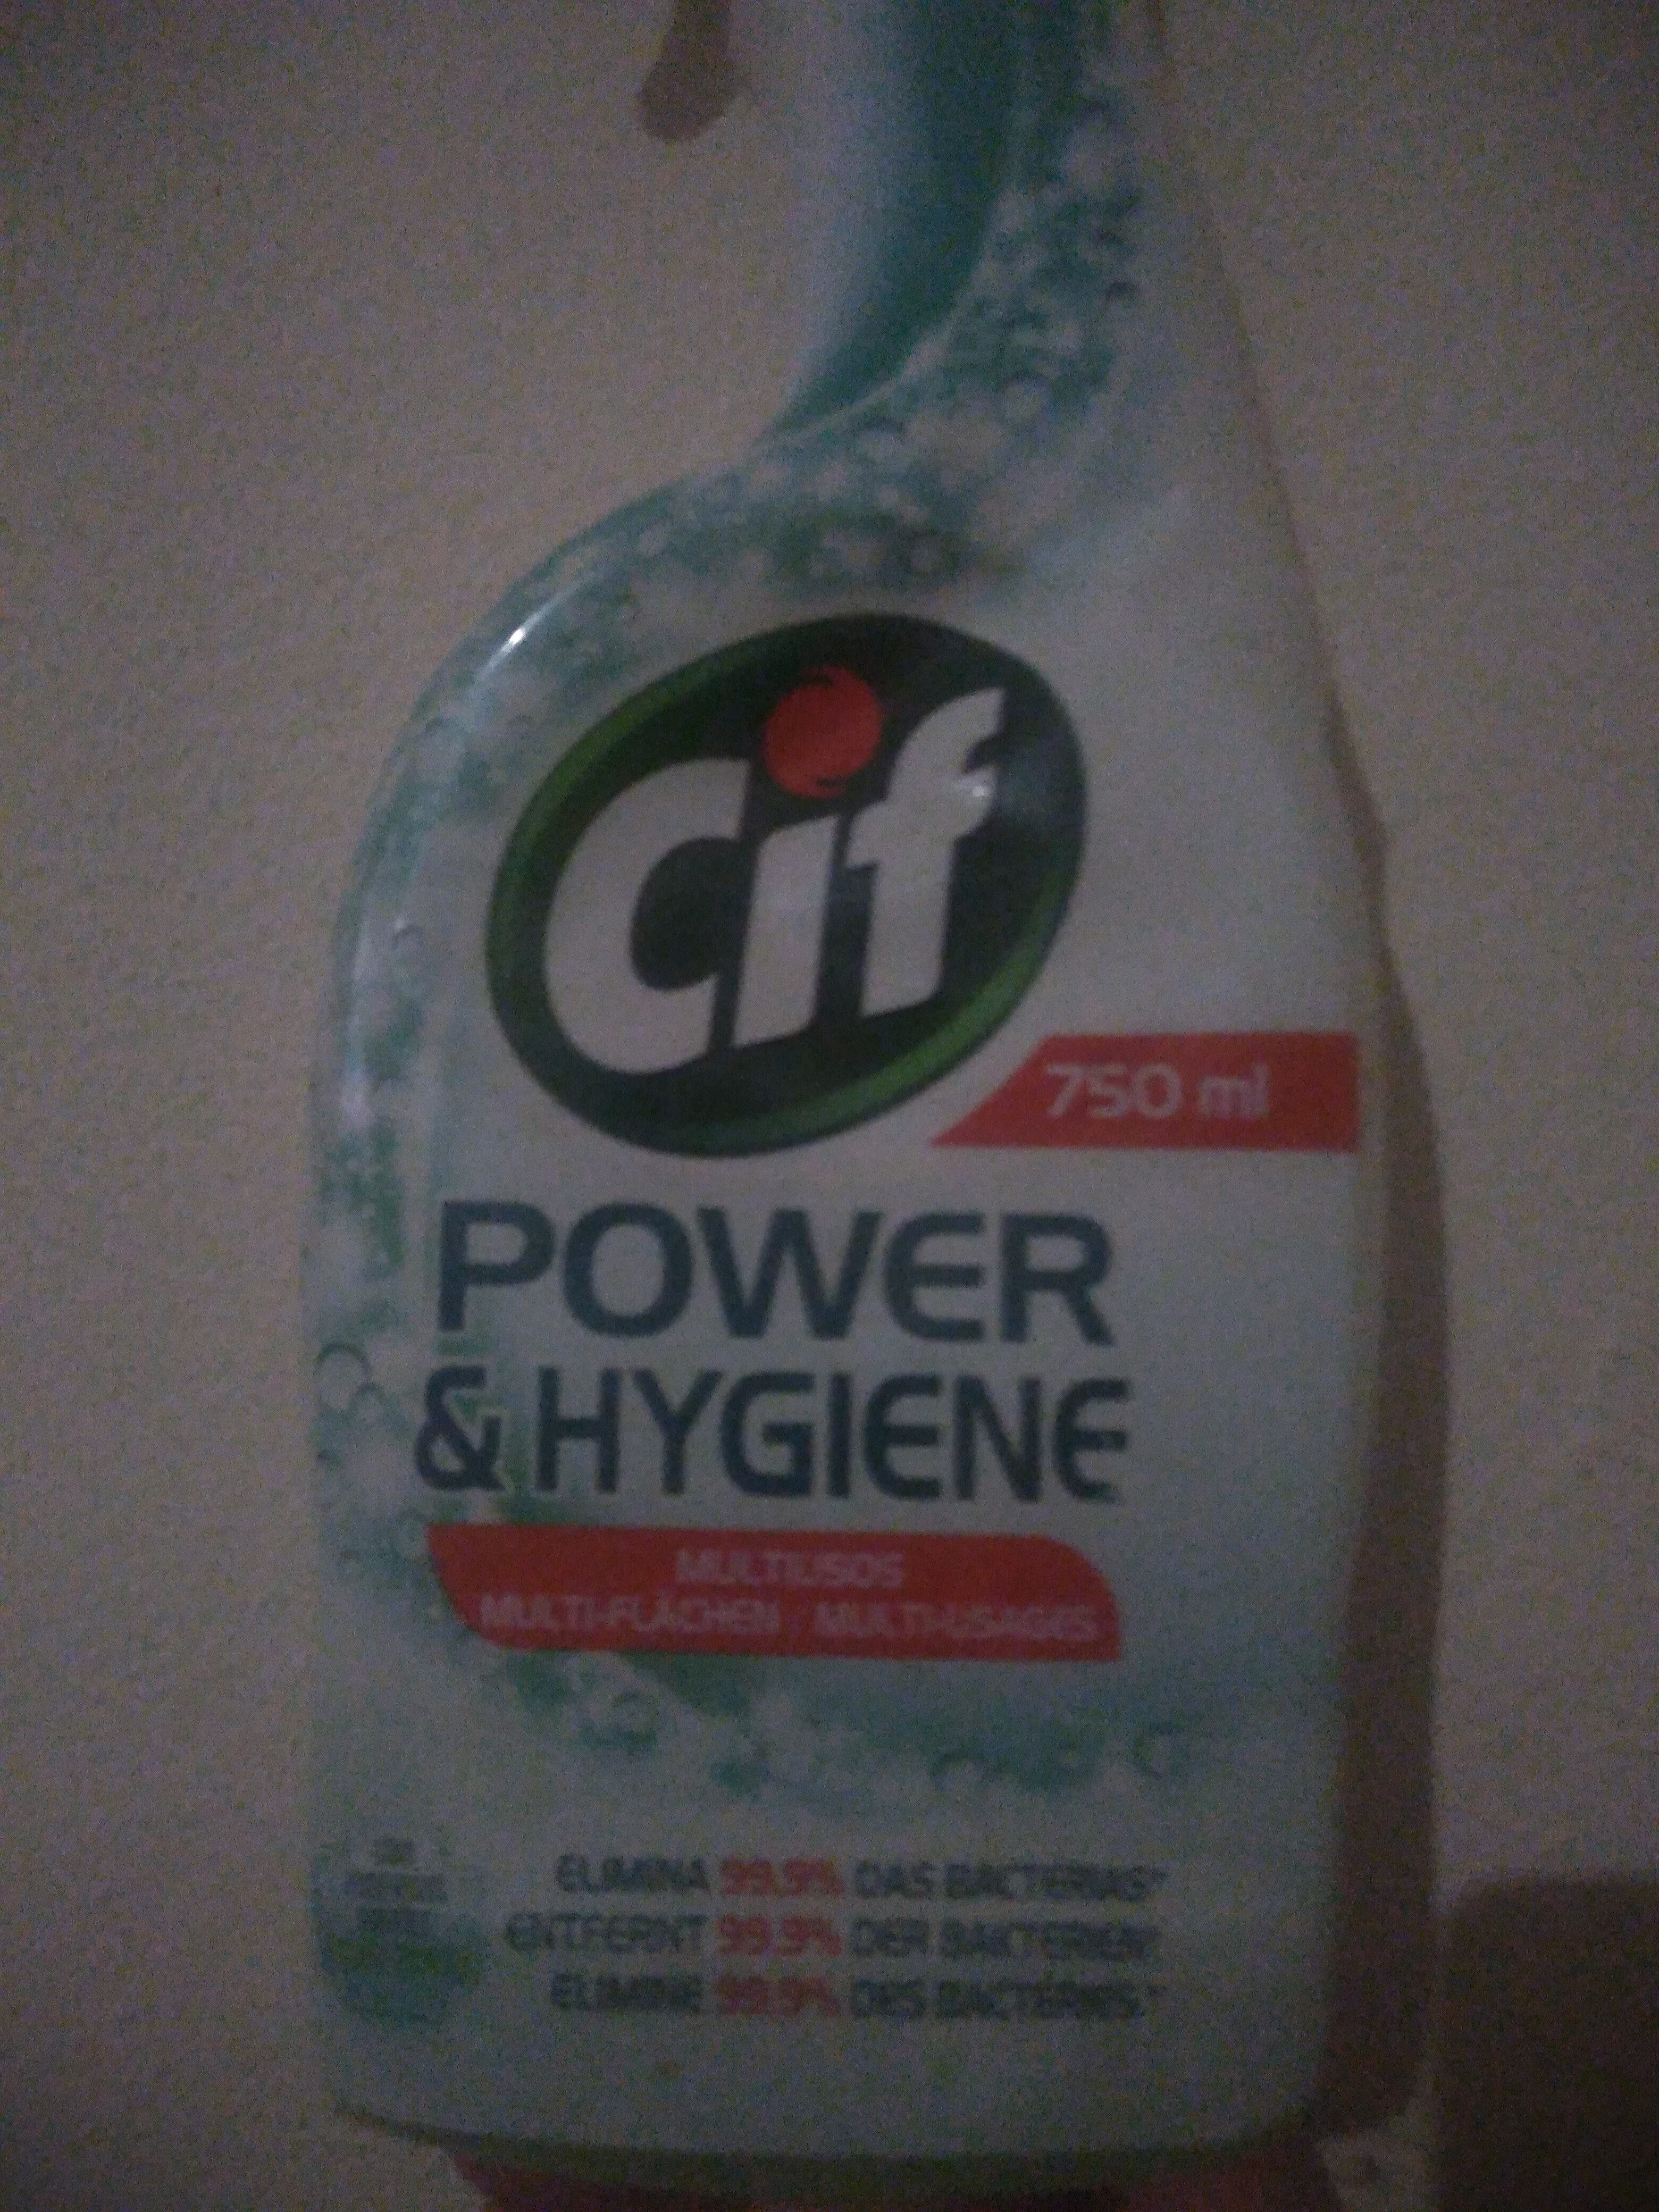 CIF POWER GEL - Product - pt